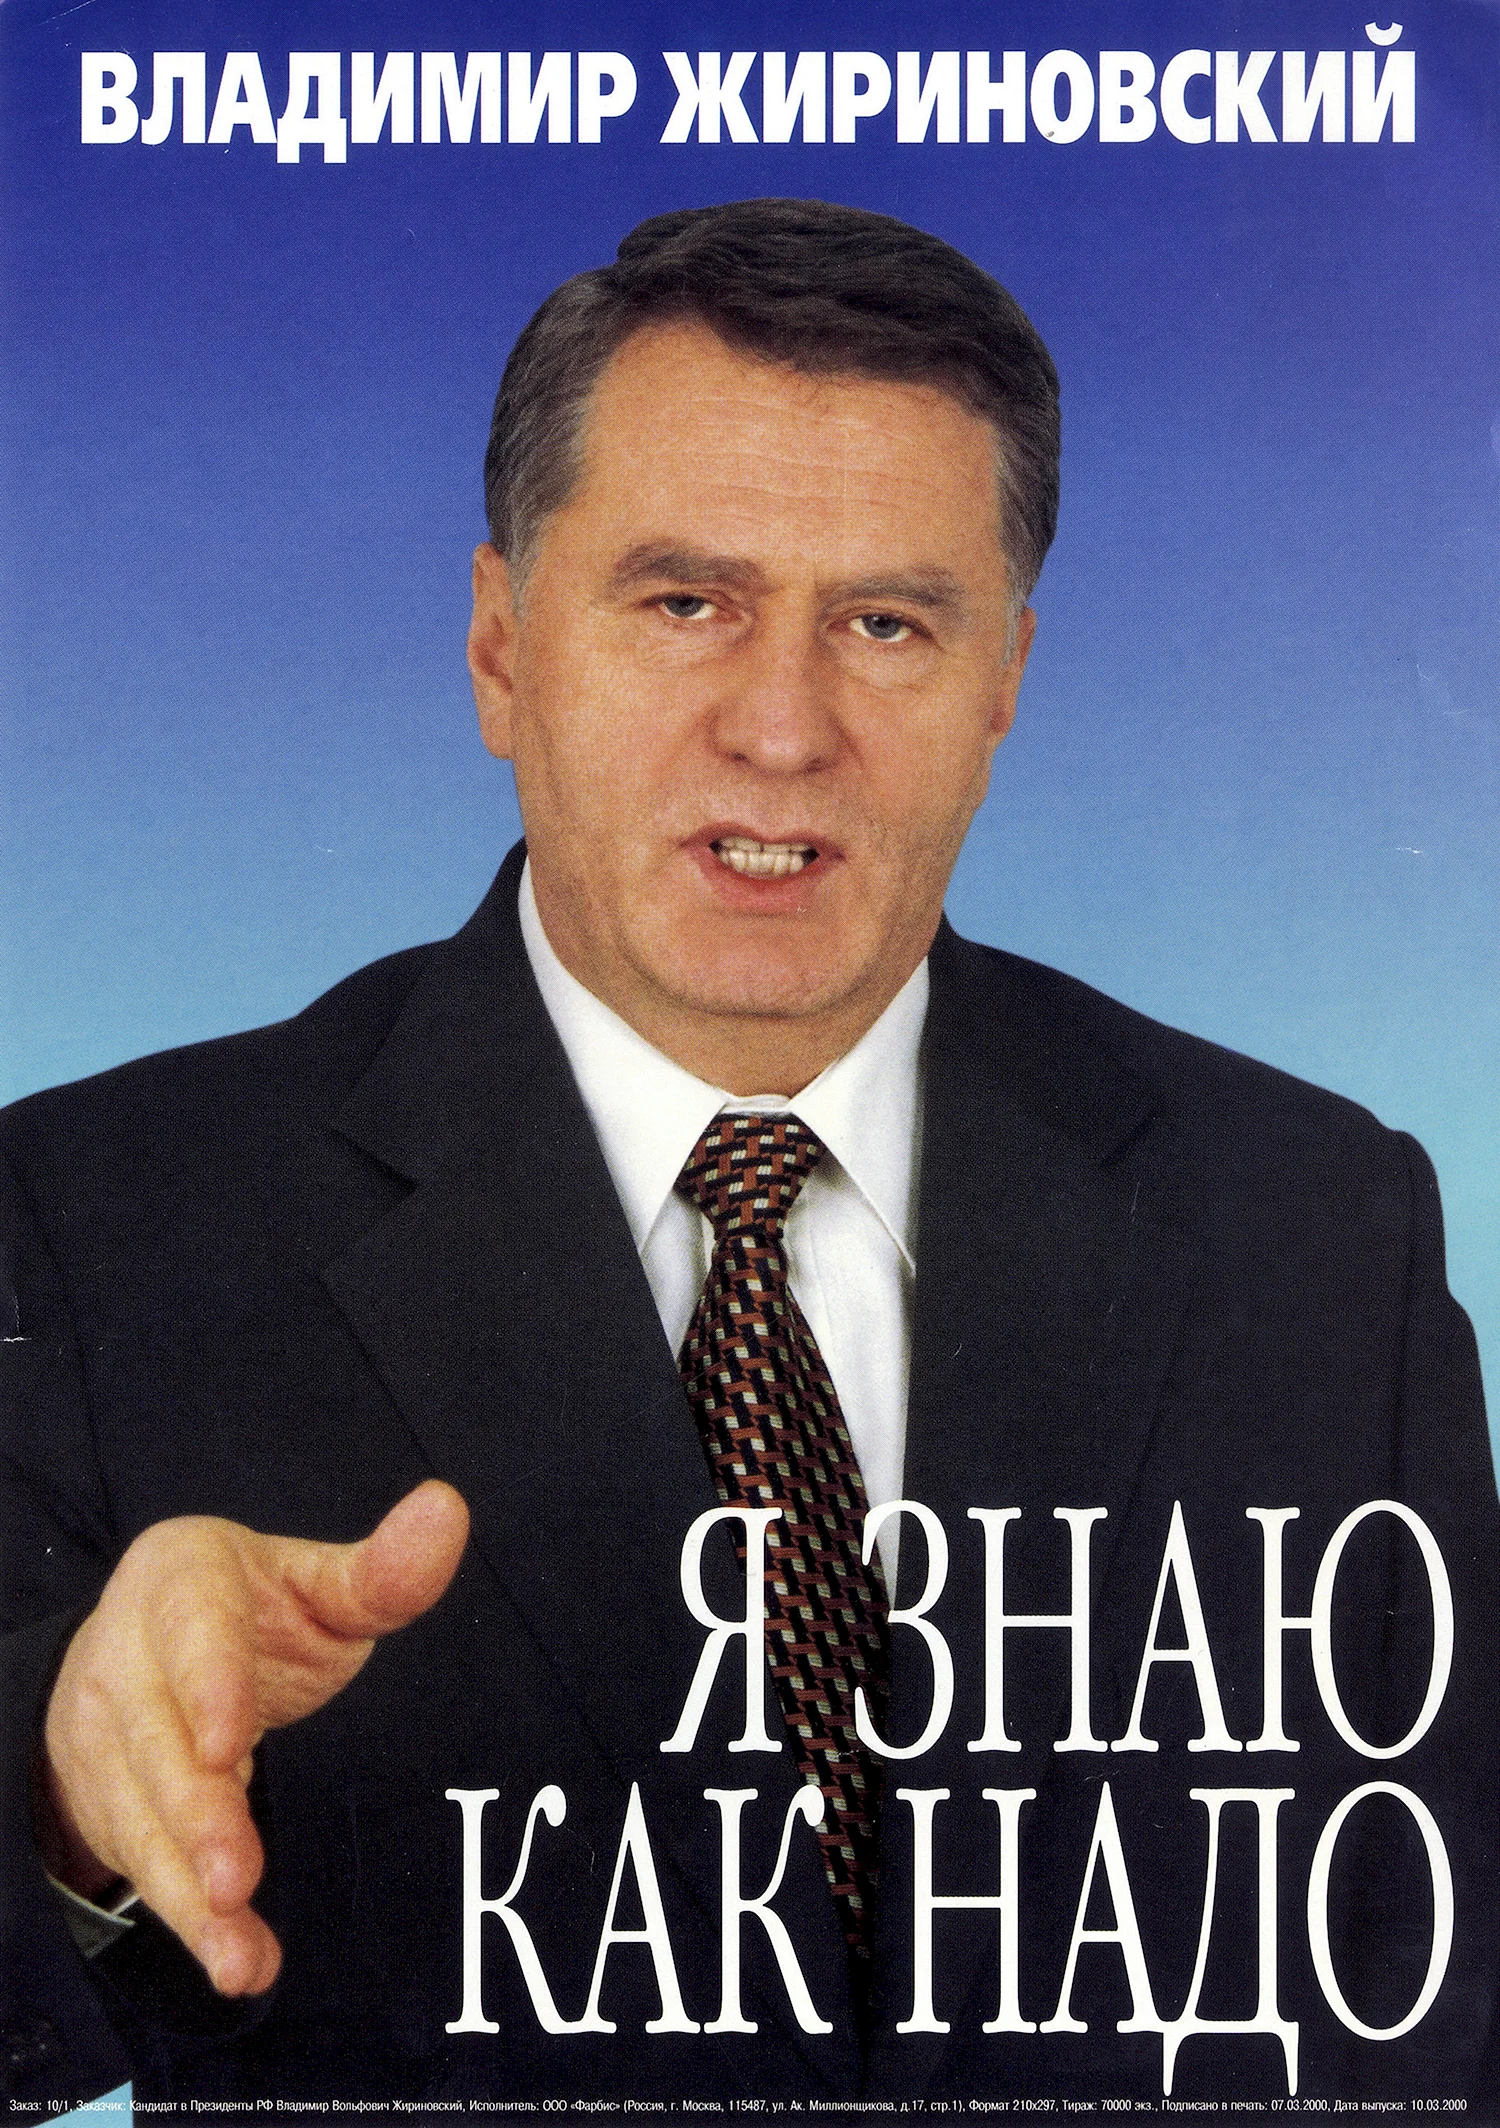 Владимир Жириновский 1996